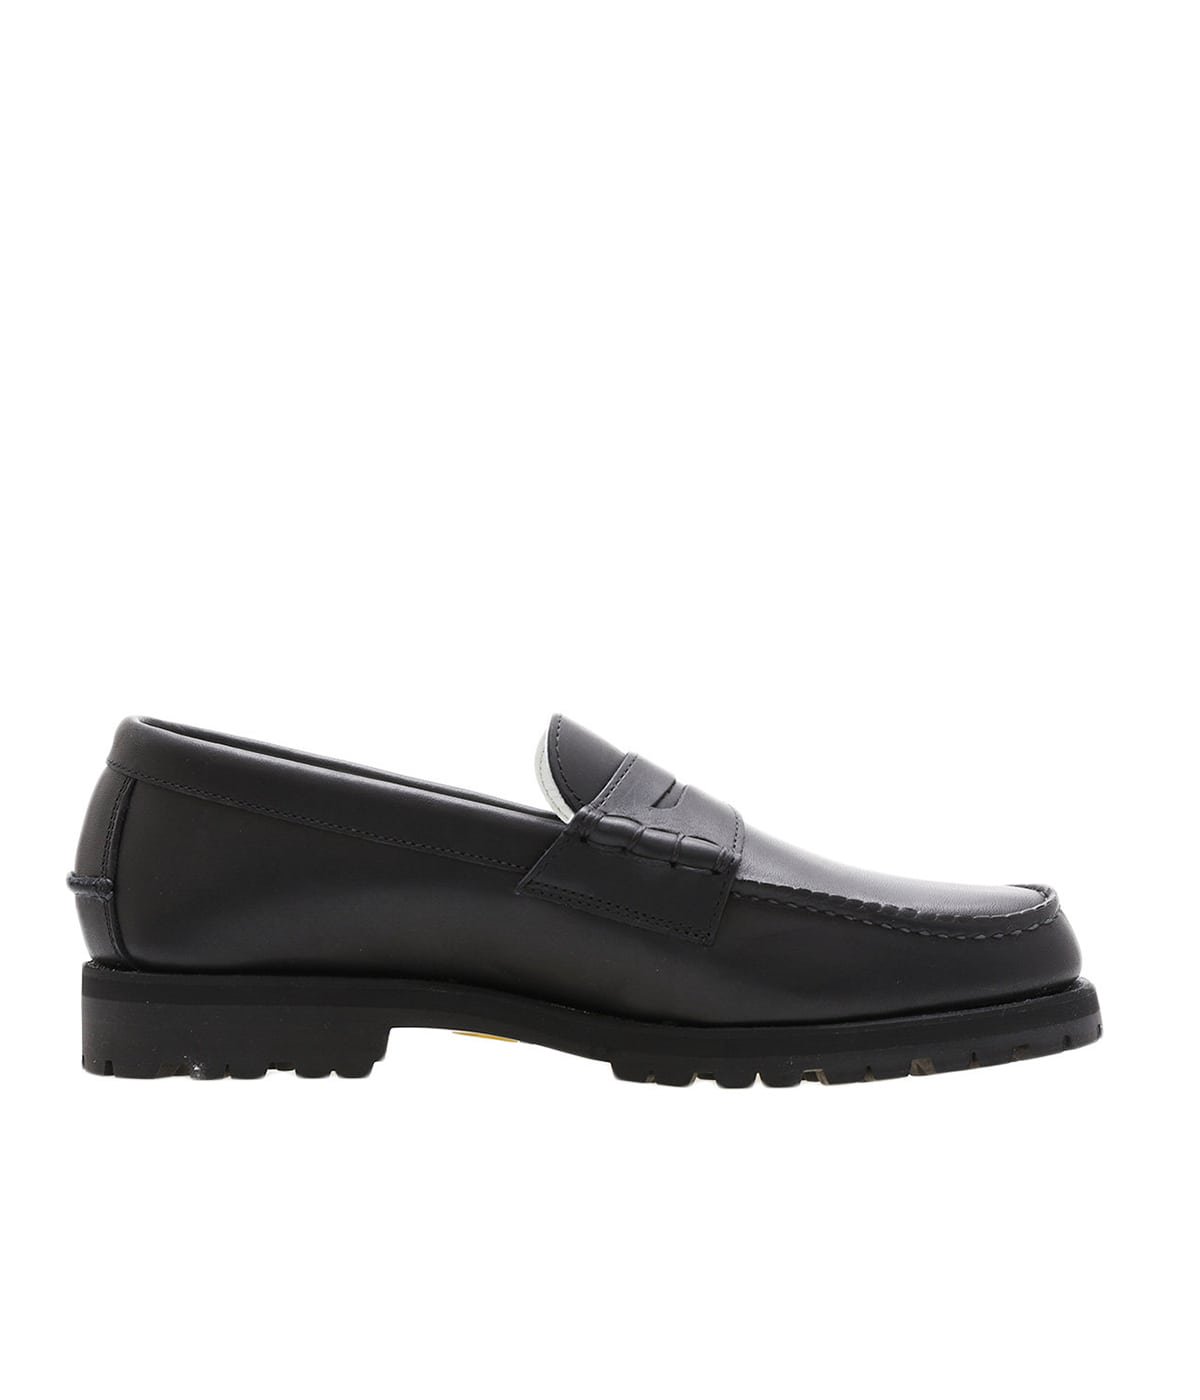 SUEDE BLACK REGAL Shoe \u0026 Co. for LENO | ardnacrushaprint.ie